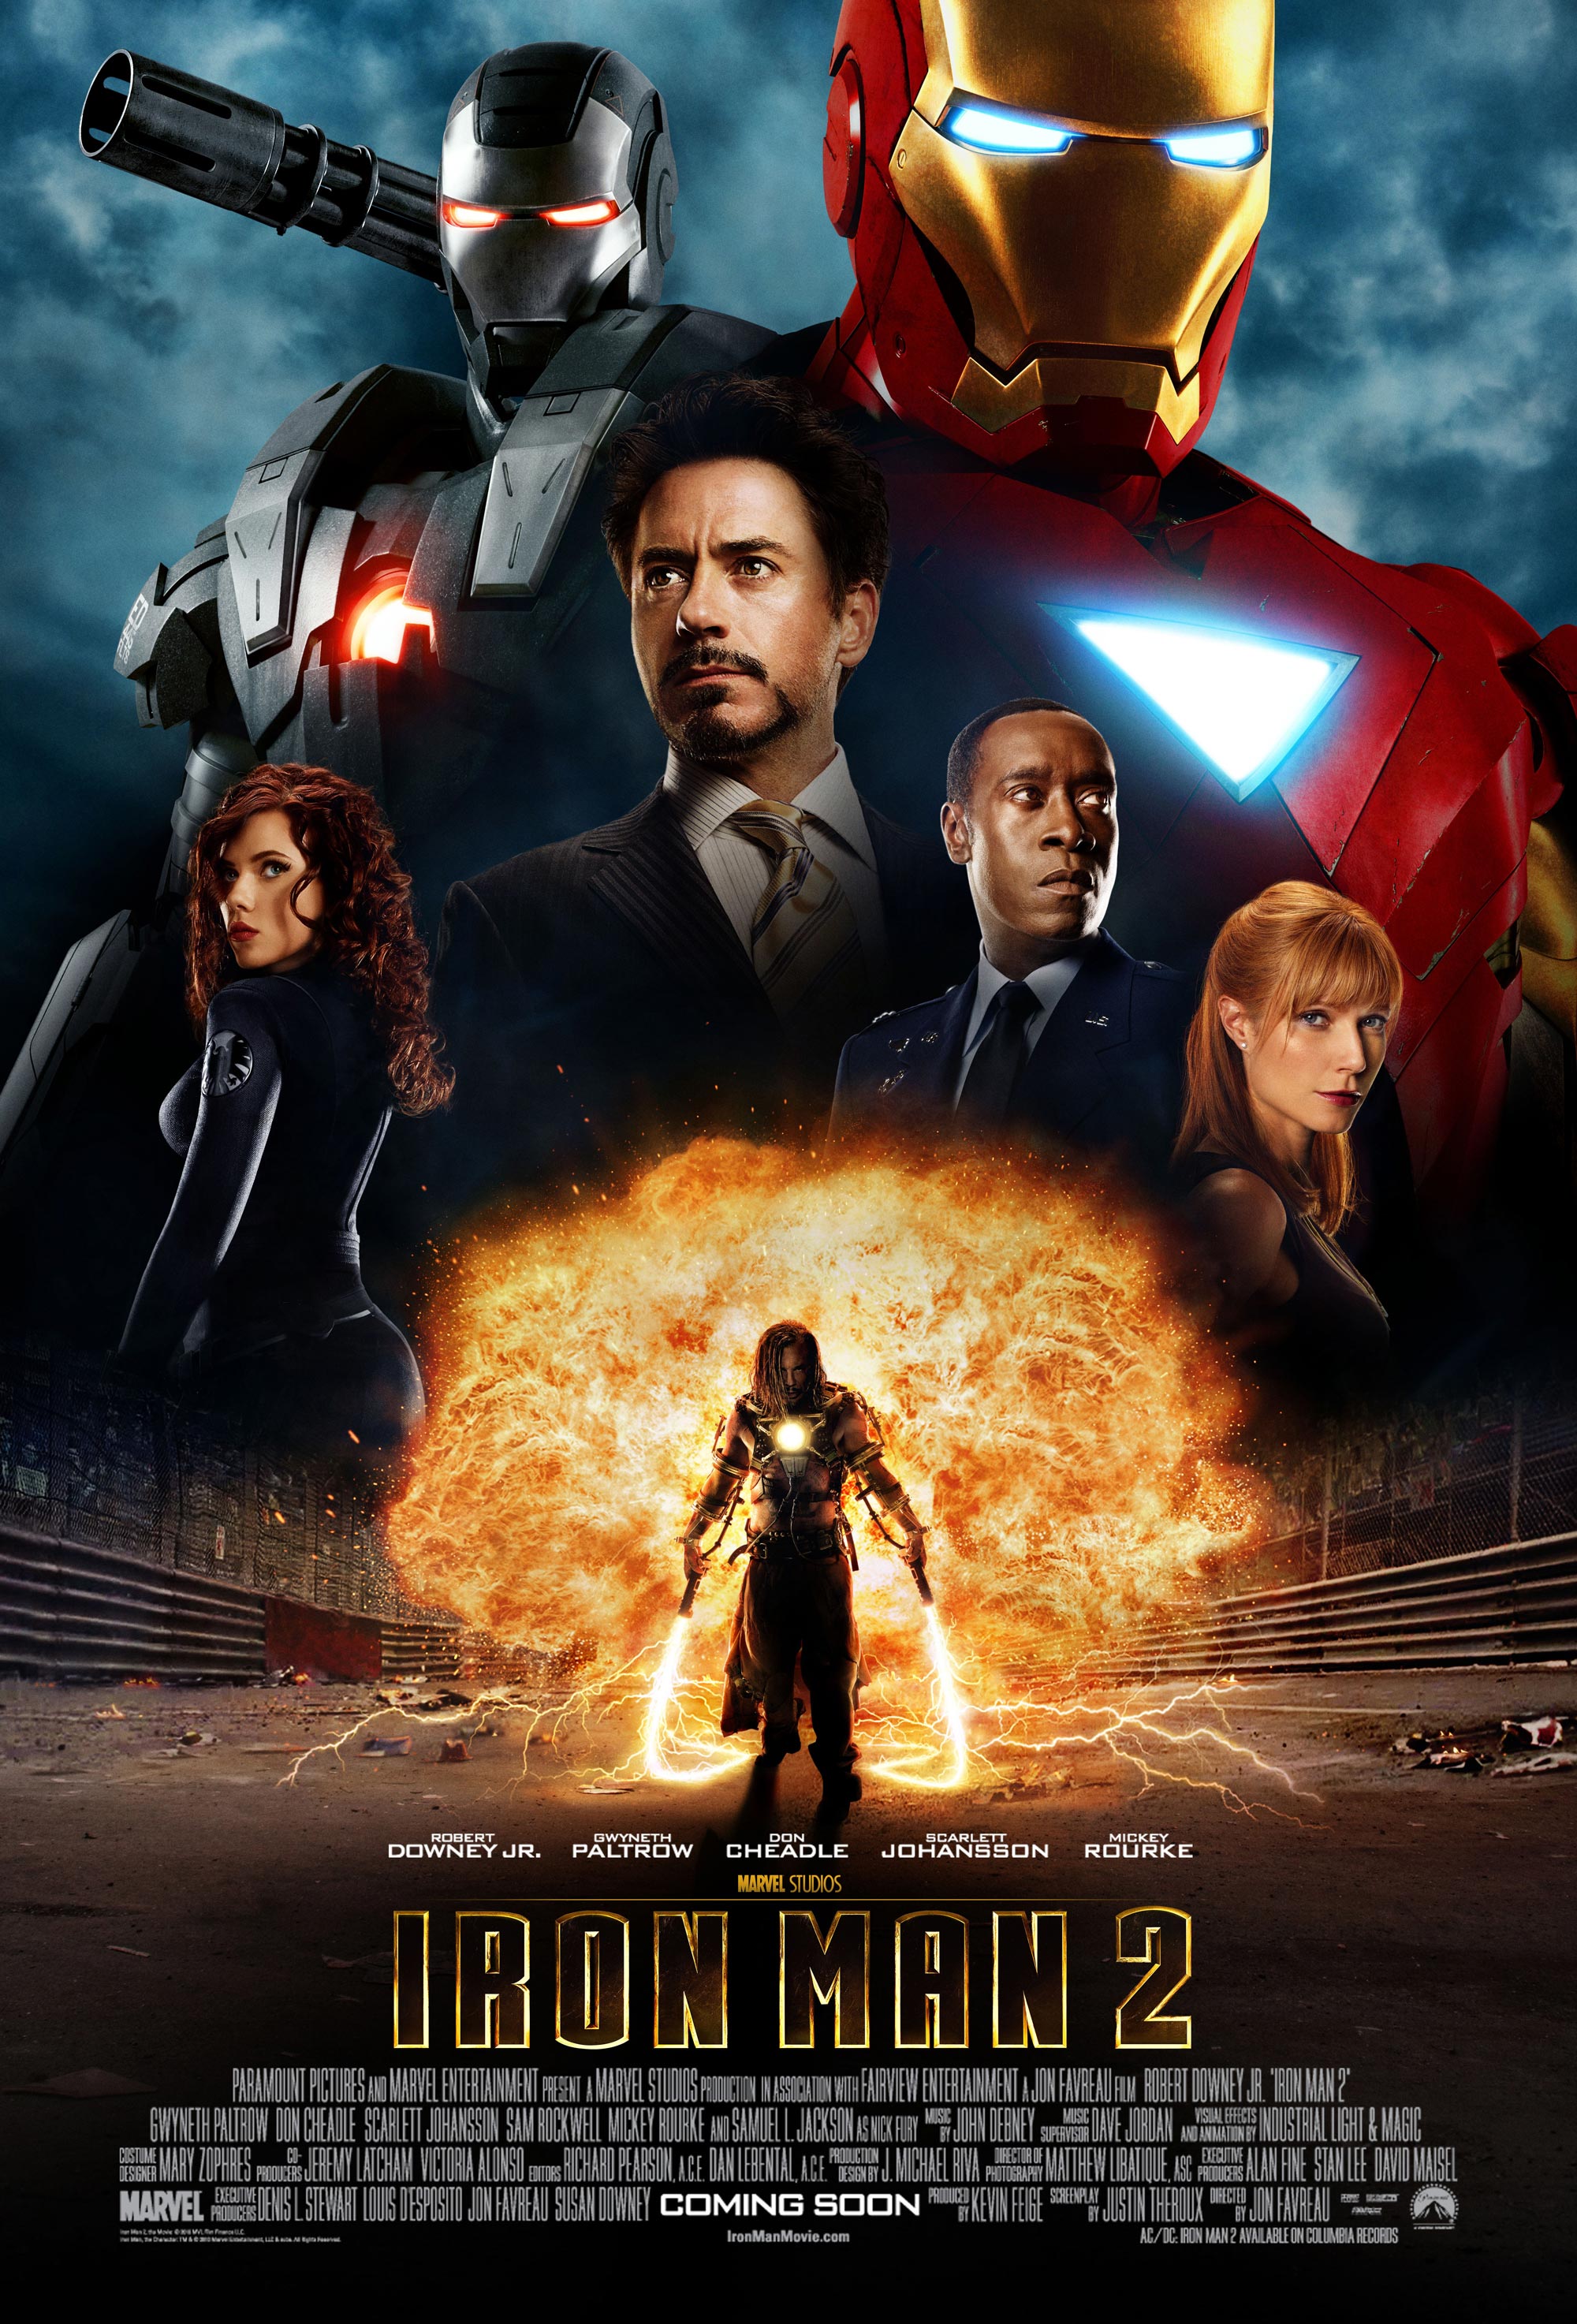 Iron Man Desktop Wallpaper